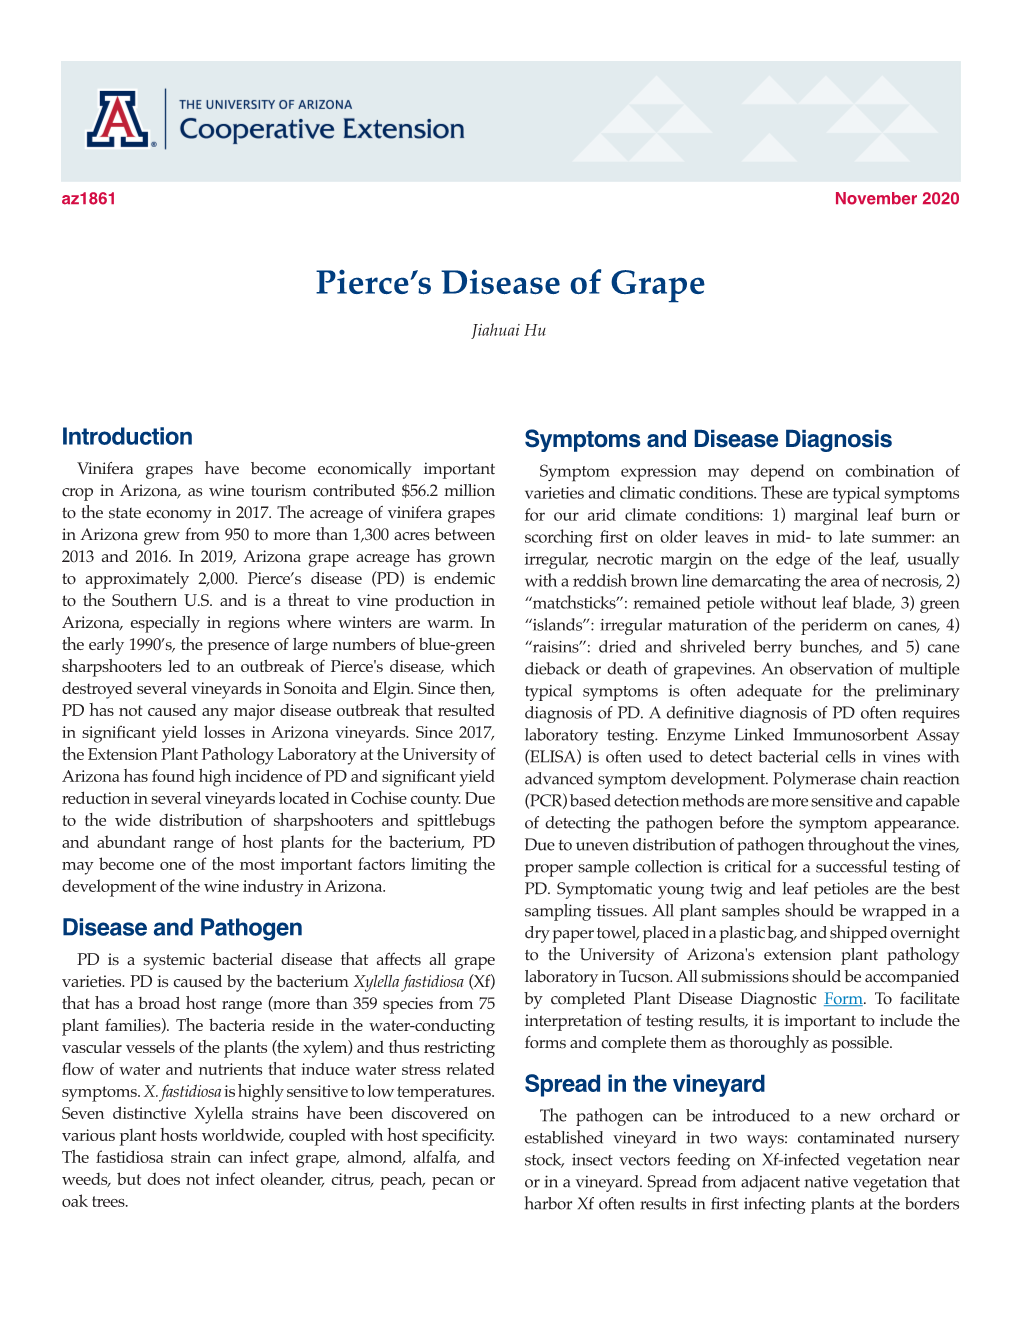 Pierce's Disease of Grape